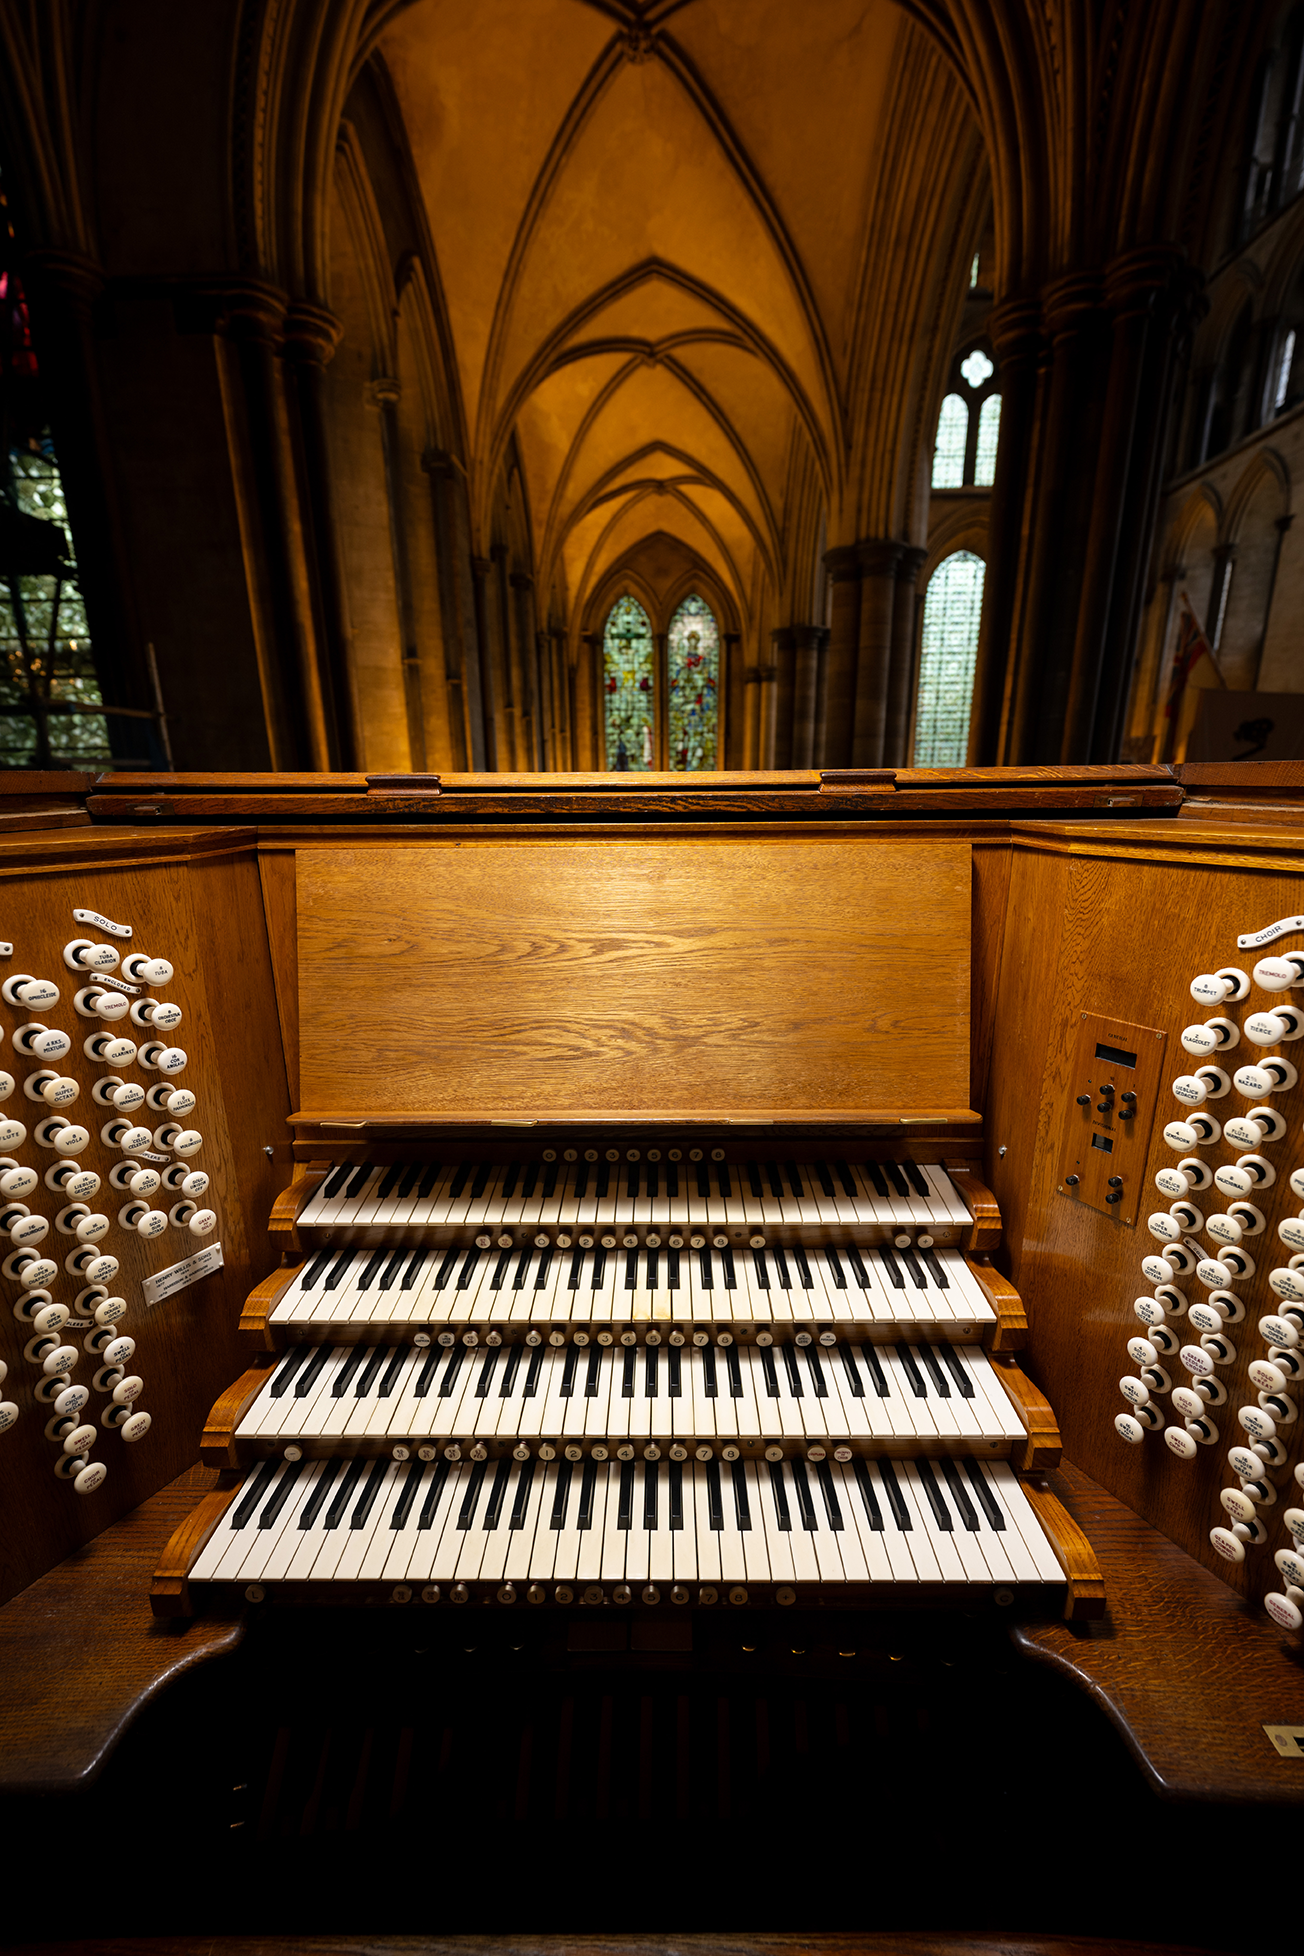 An organ console inside Salisbury Cathedral